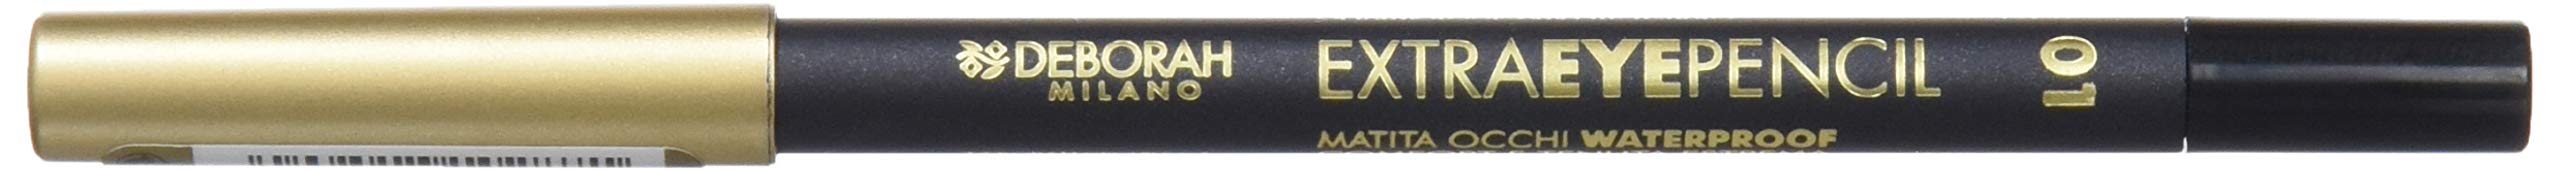 Deborah Milano Extra Eye Pencil Plastic 1 Black kredka do oczu